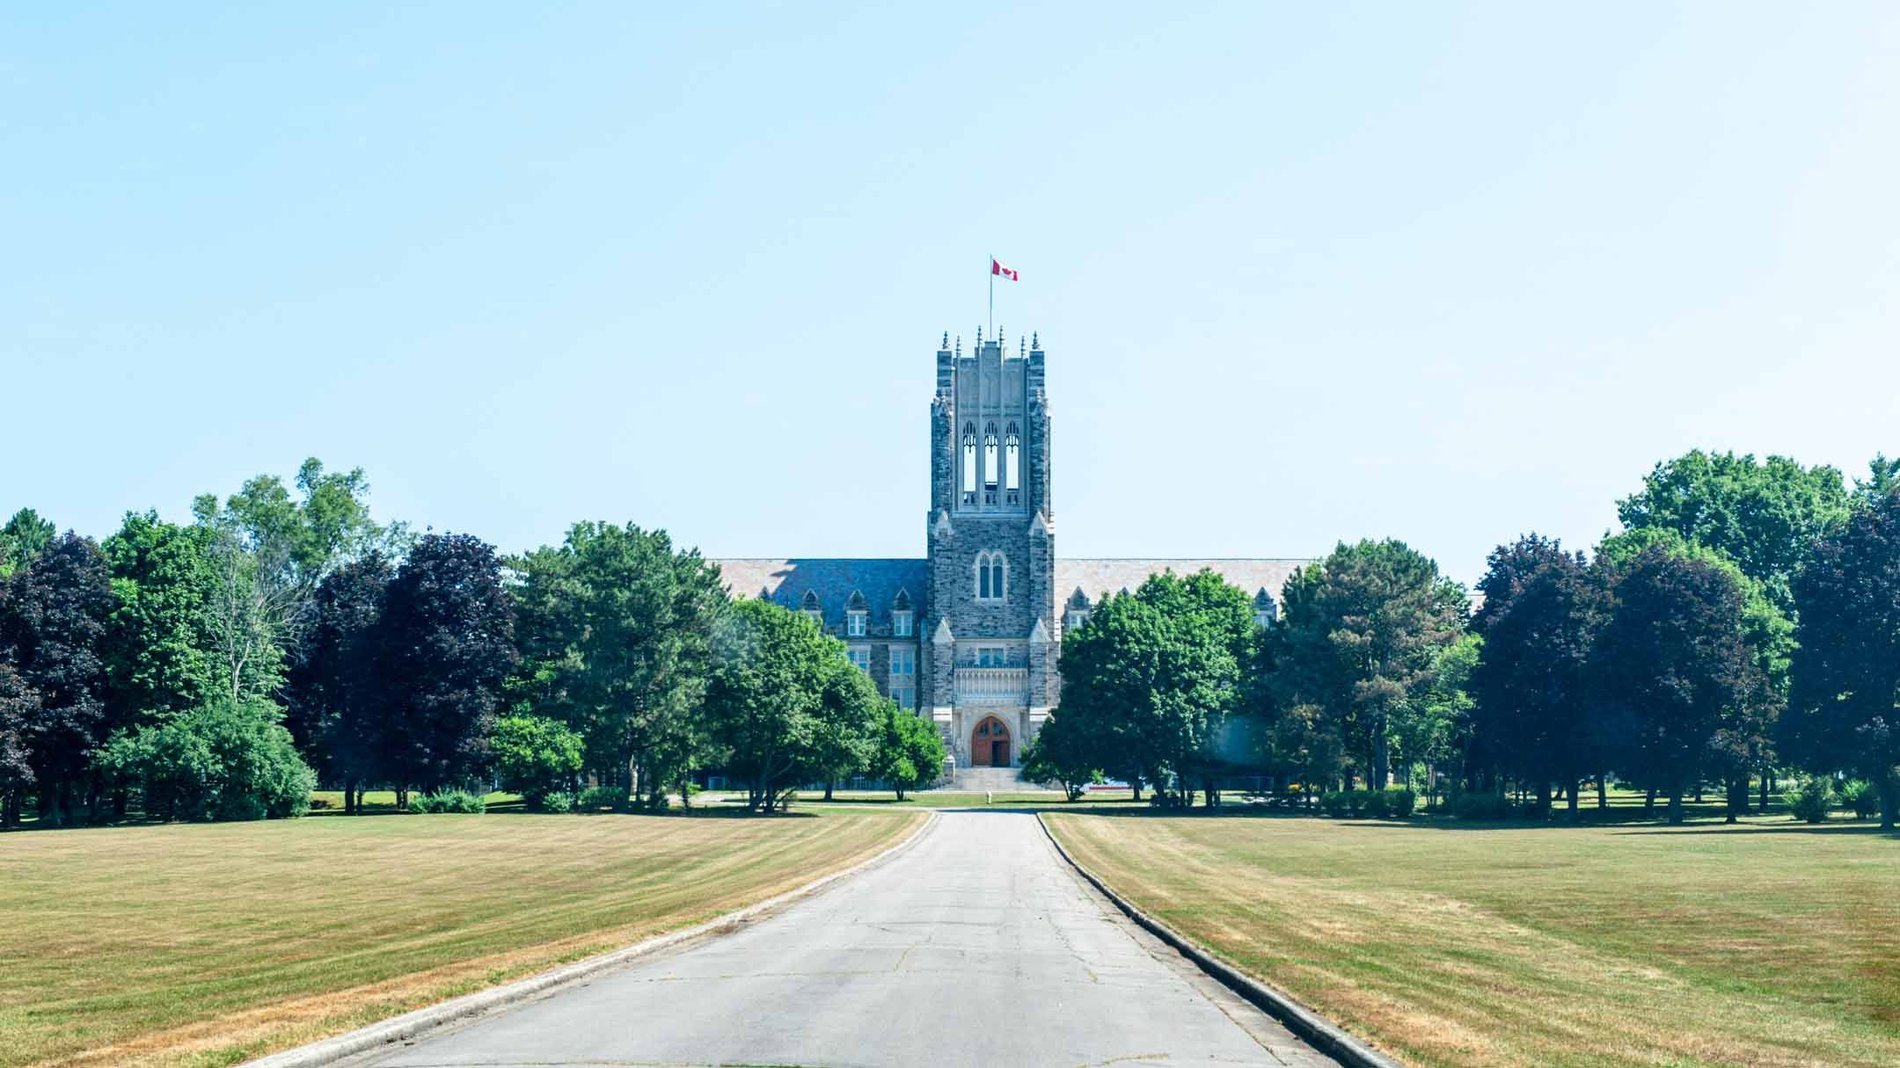 University of Western Ontario in London, Ontario